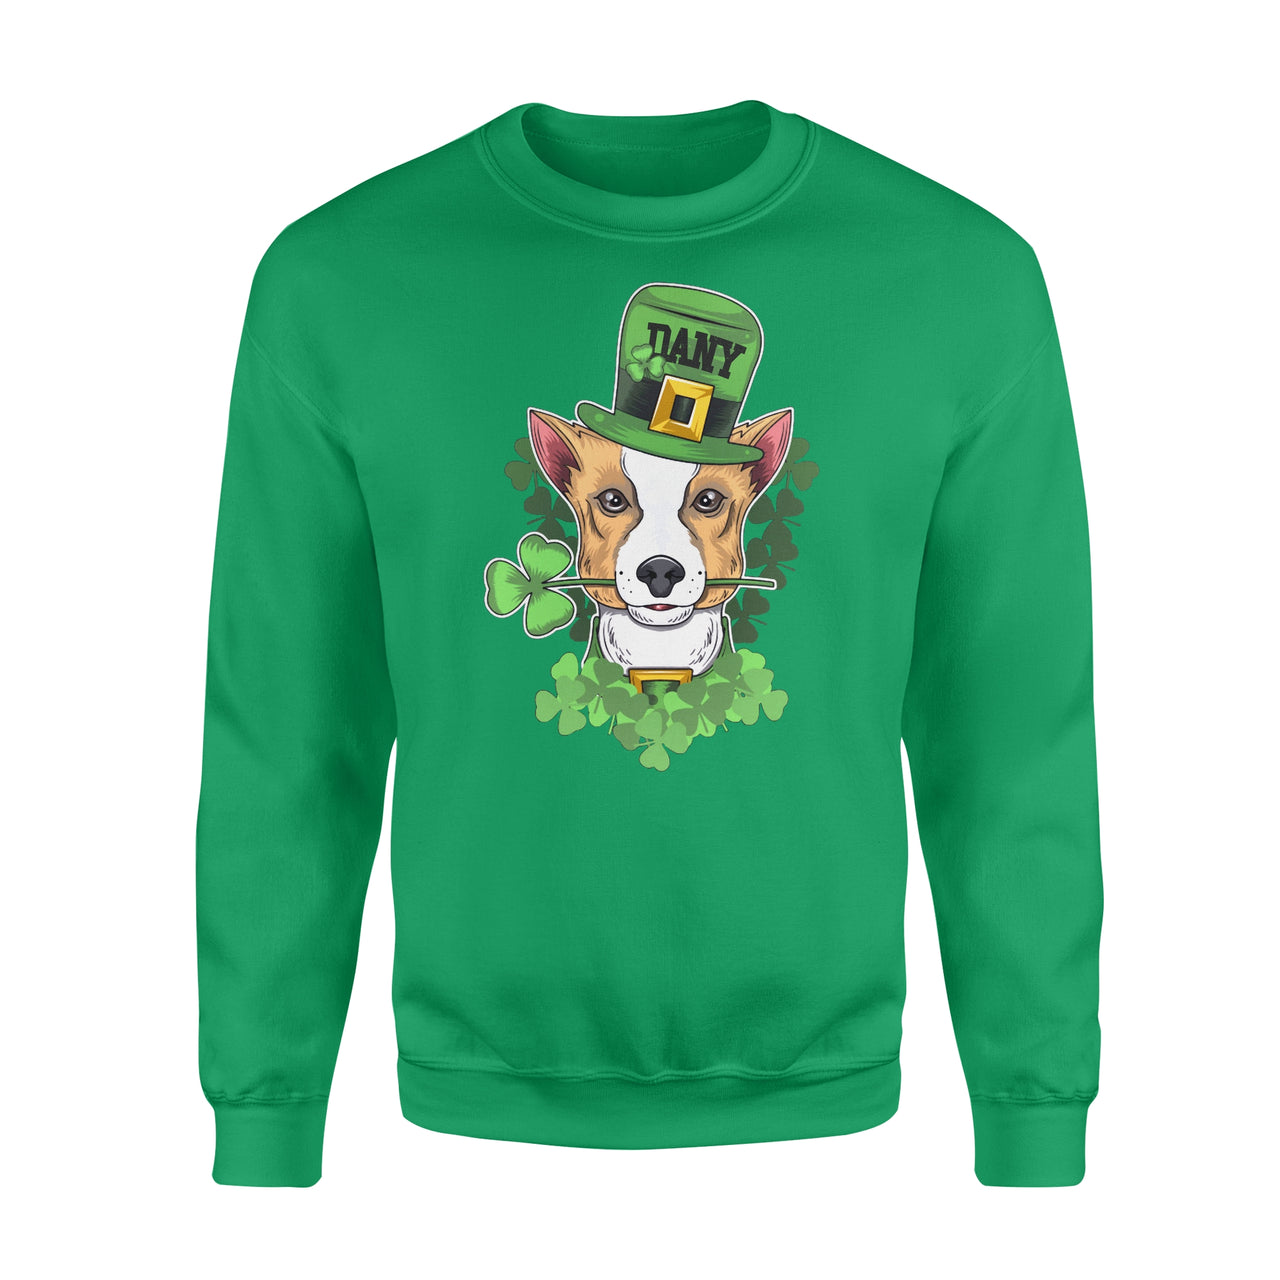 Personalized St. Patrick Gift Idea - Coolest Chihuahua - Standard Crew Neck Sweatshirt